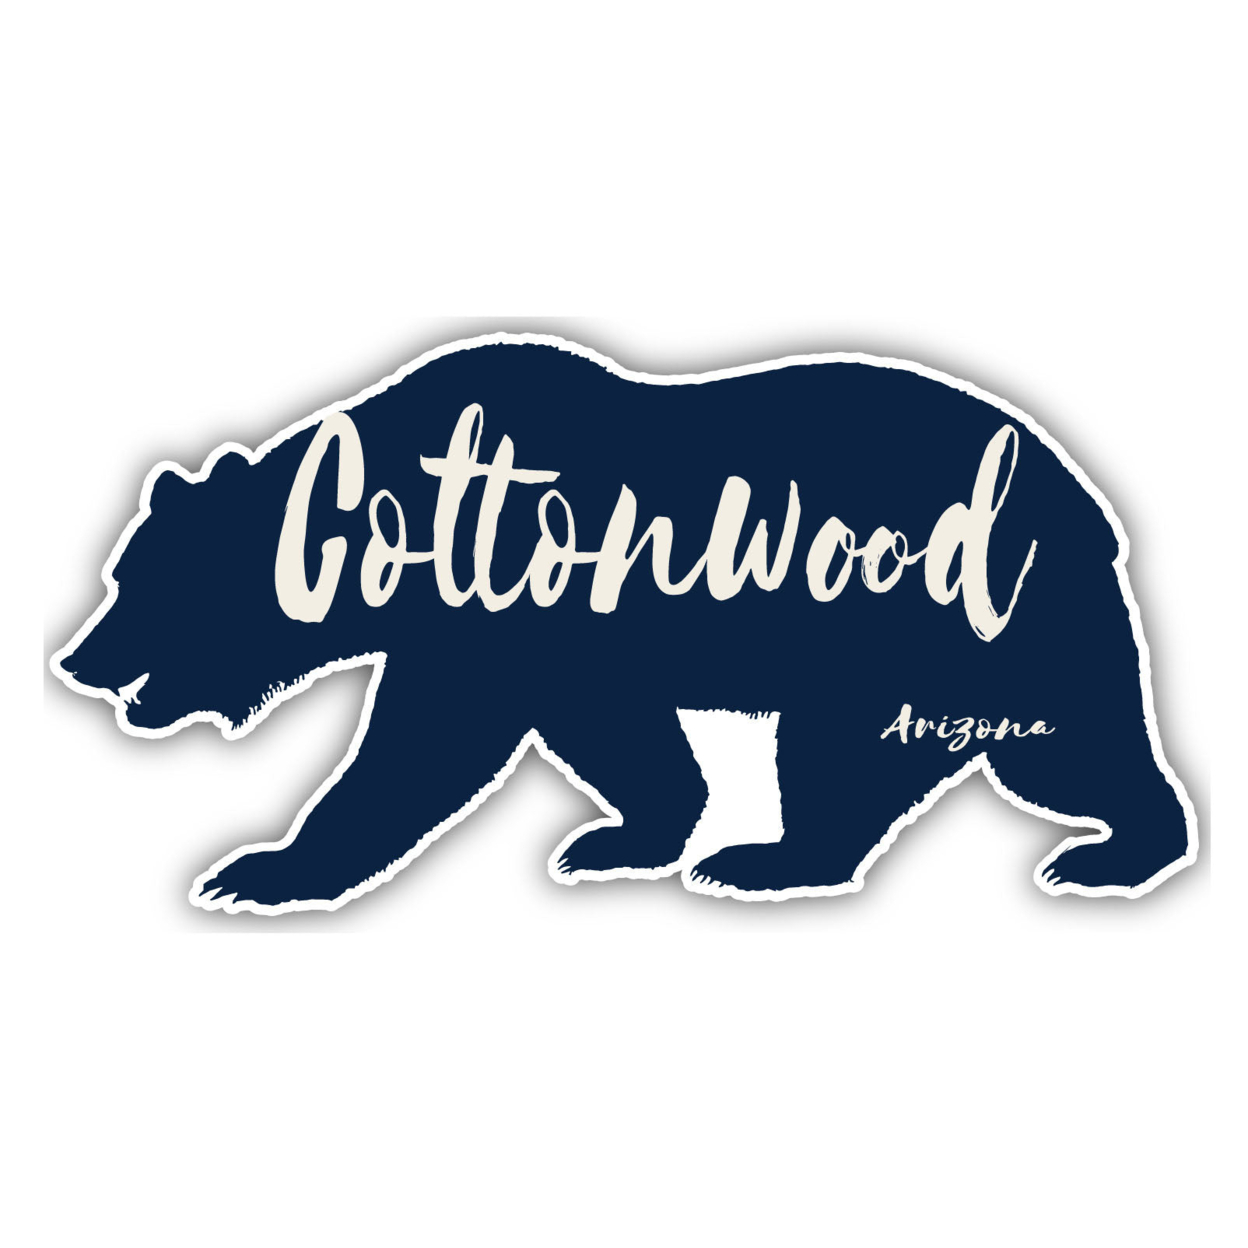 Cottonwood Arizona Souvenir Decorative Stickers (Choose Theme And Size) - 4-Pack, 10-Inch, Camp Life